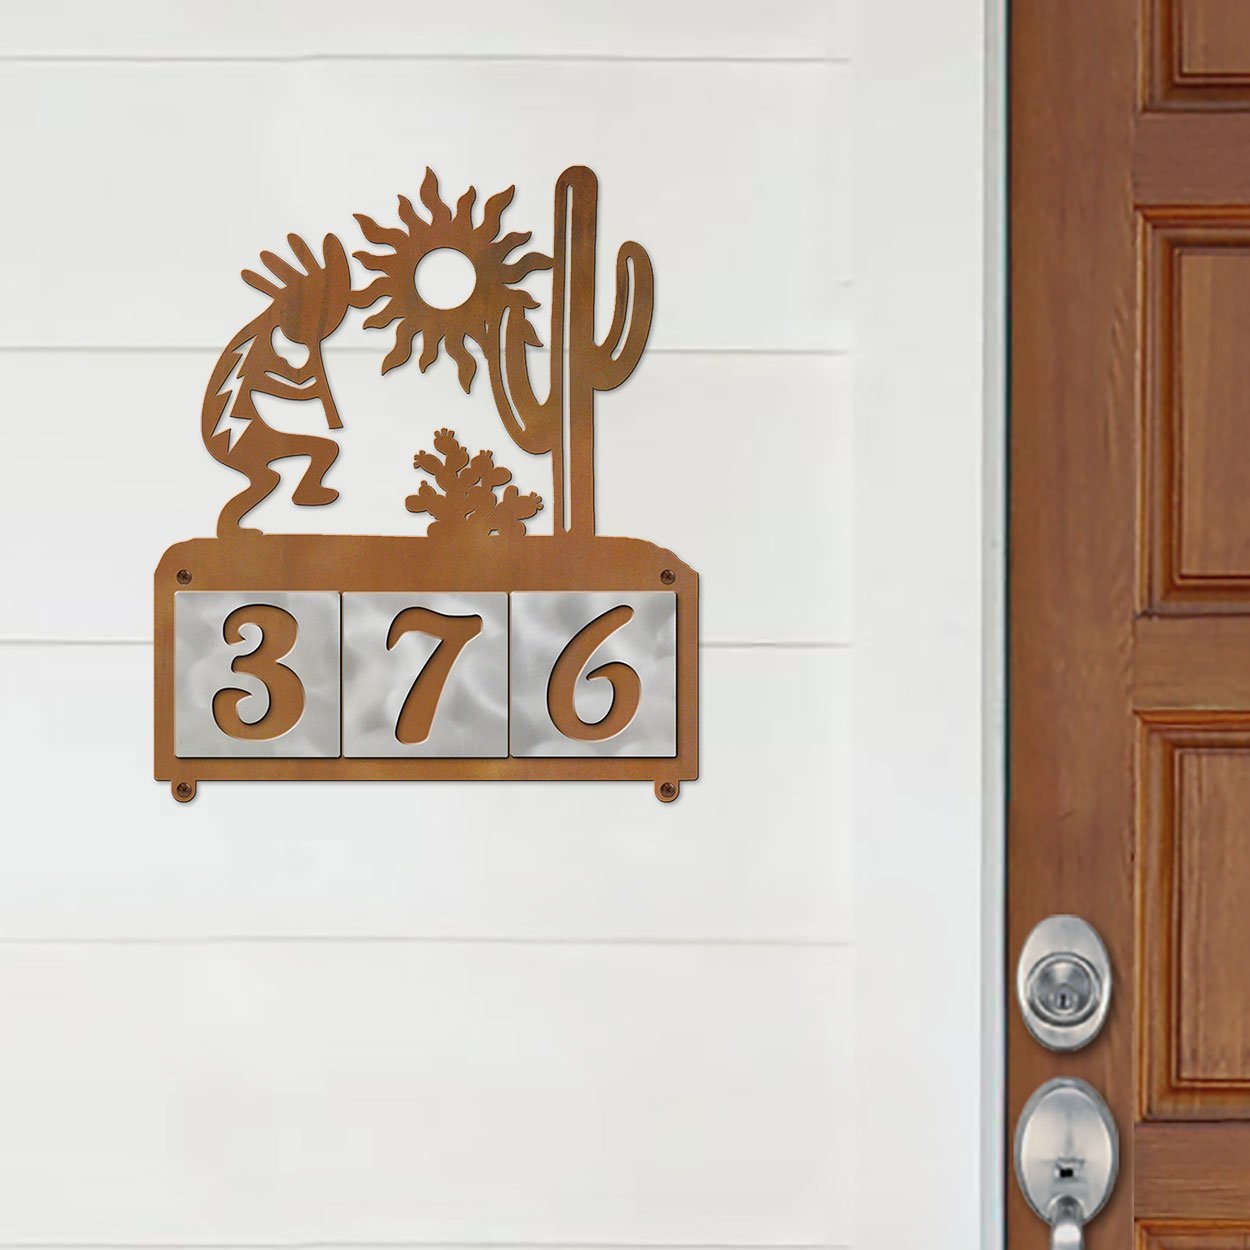 607153 - Kokopelli Desert Scene Design 3-Digit Horizontal 4-inch Tile Outdoor House Numbers